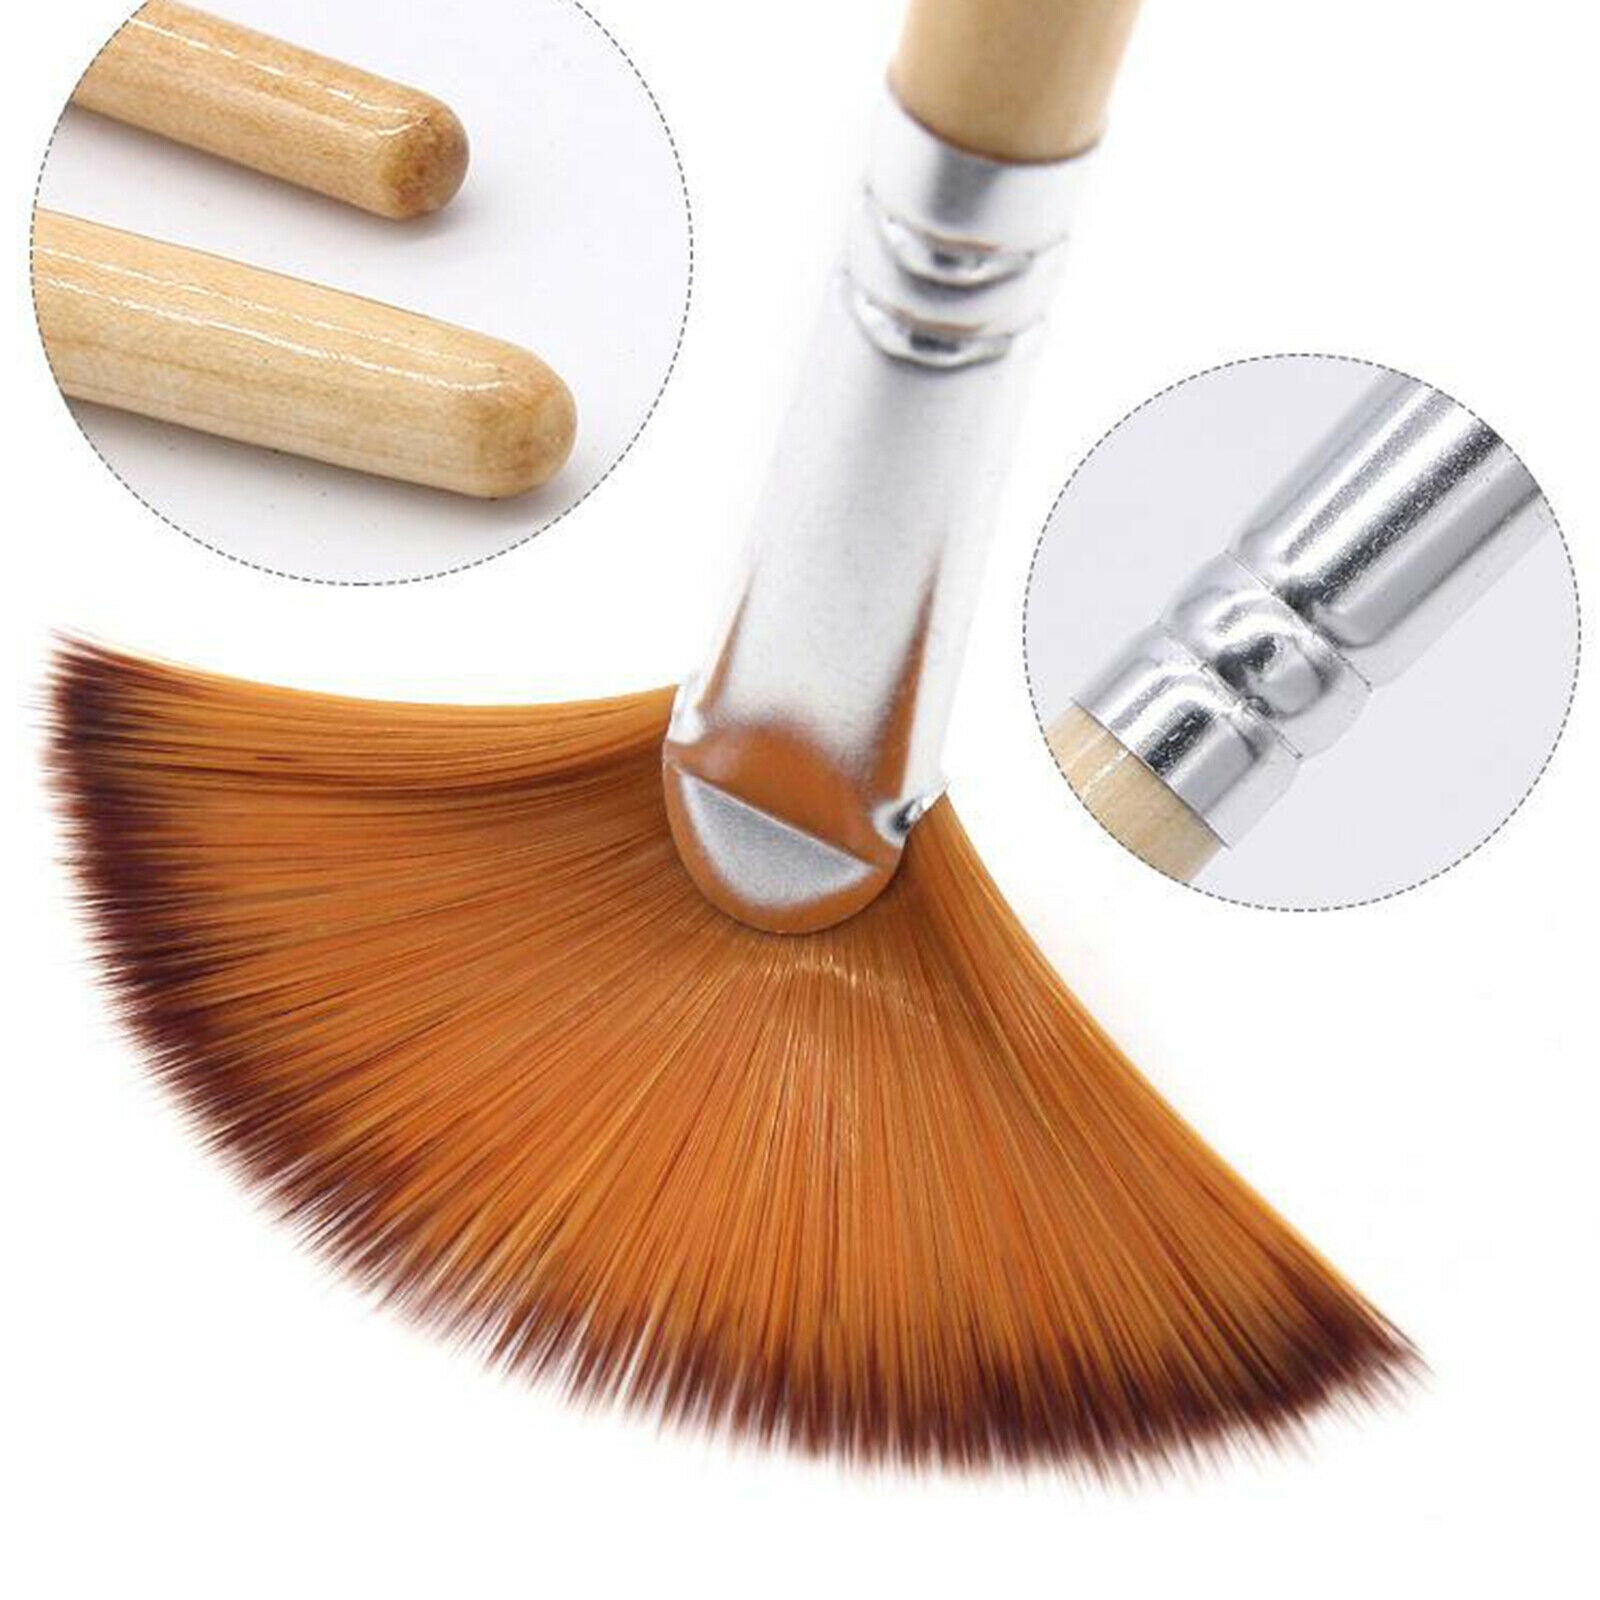 5 Pcs Artist Fan Shape Painting Brush Set for Canvas Wood Nylon Hair Painting